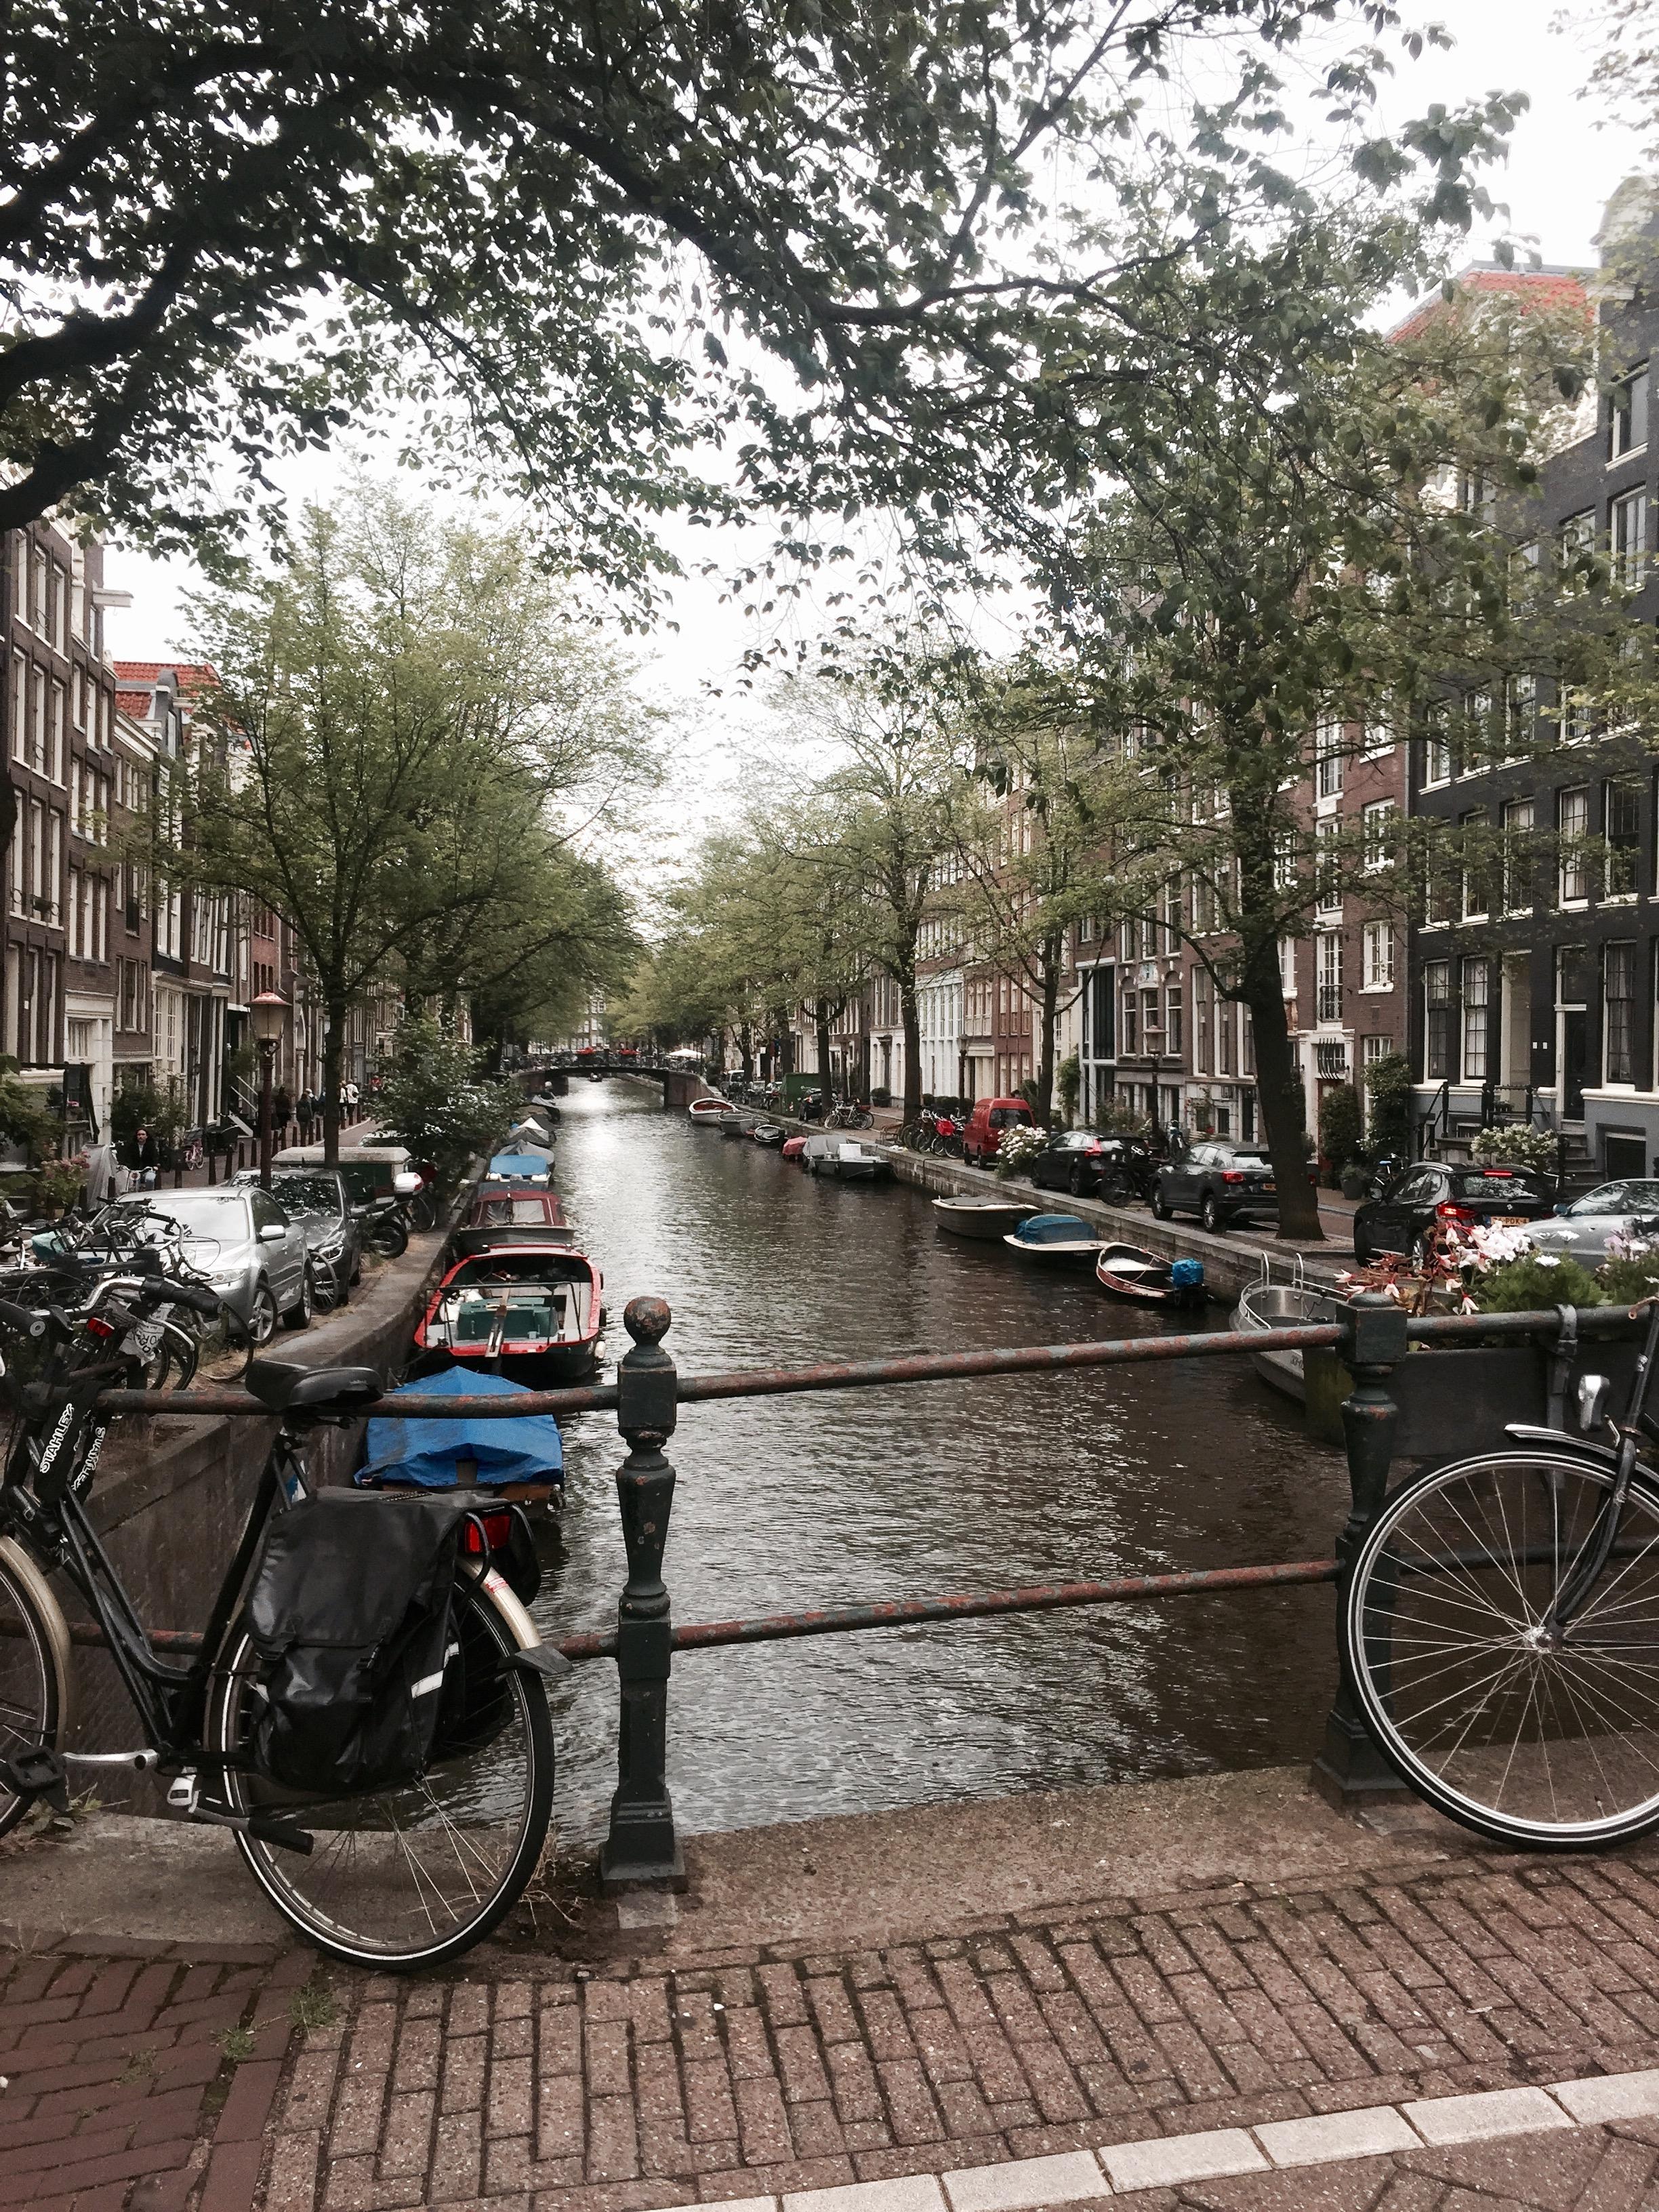 Hoi Amsterdam!
#amsterdam #gracht #love #käse 